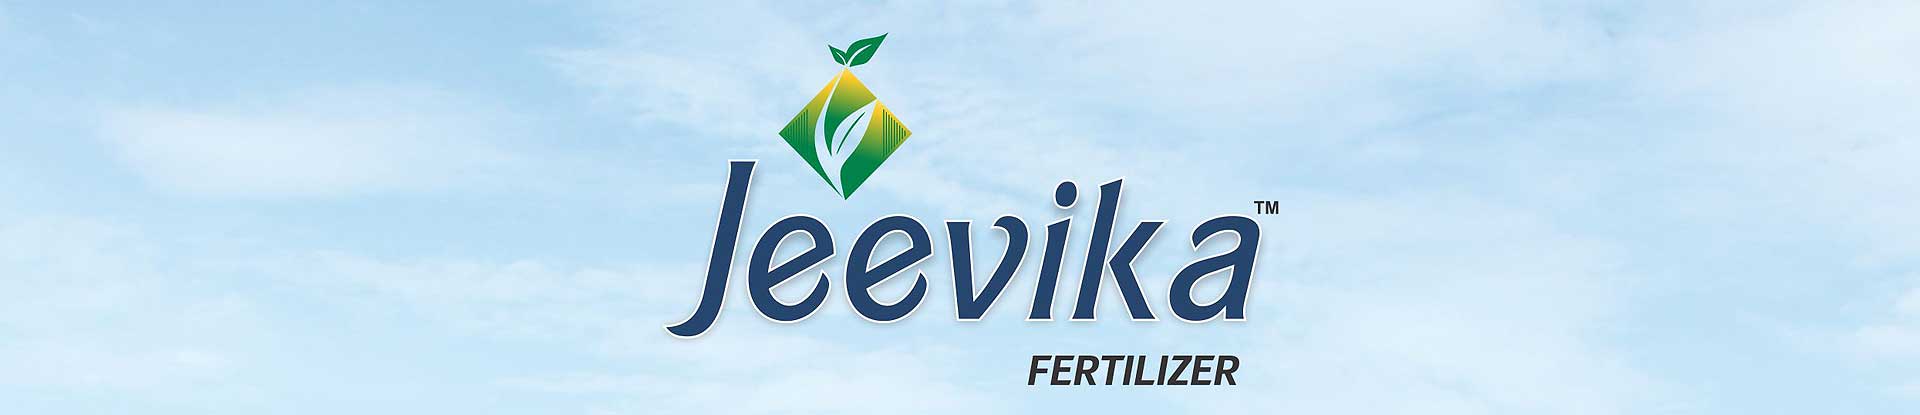 Jeevika Fertilizer | Captain Polyplast Ltd.